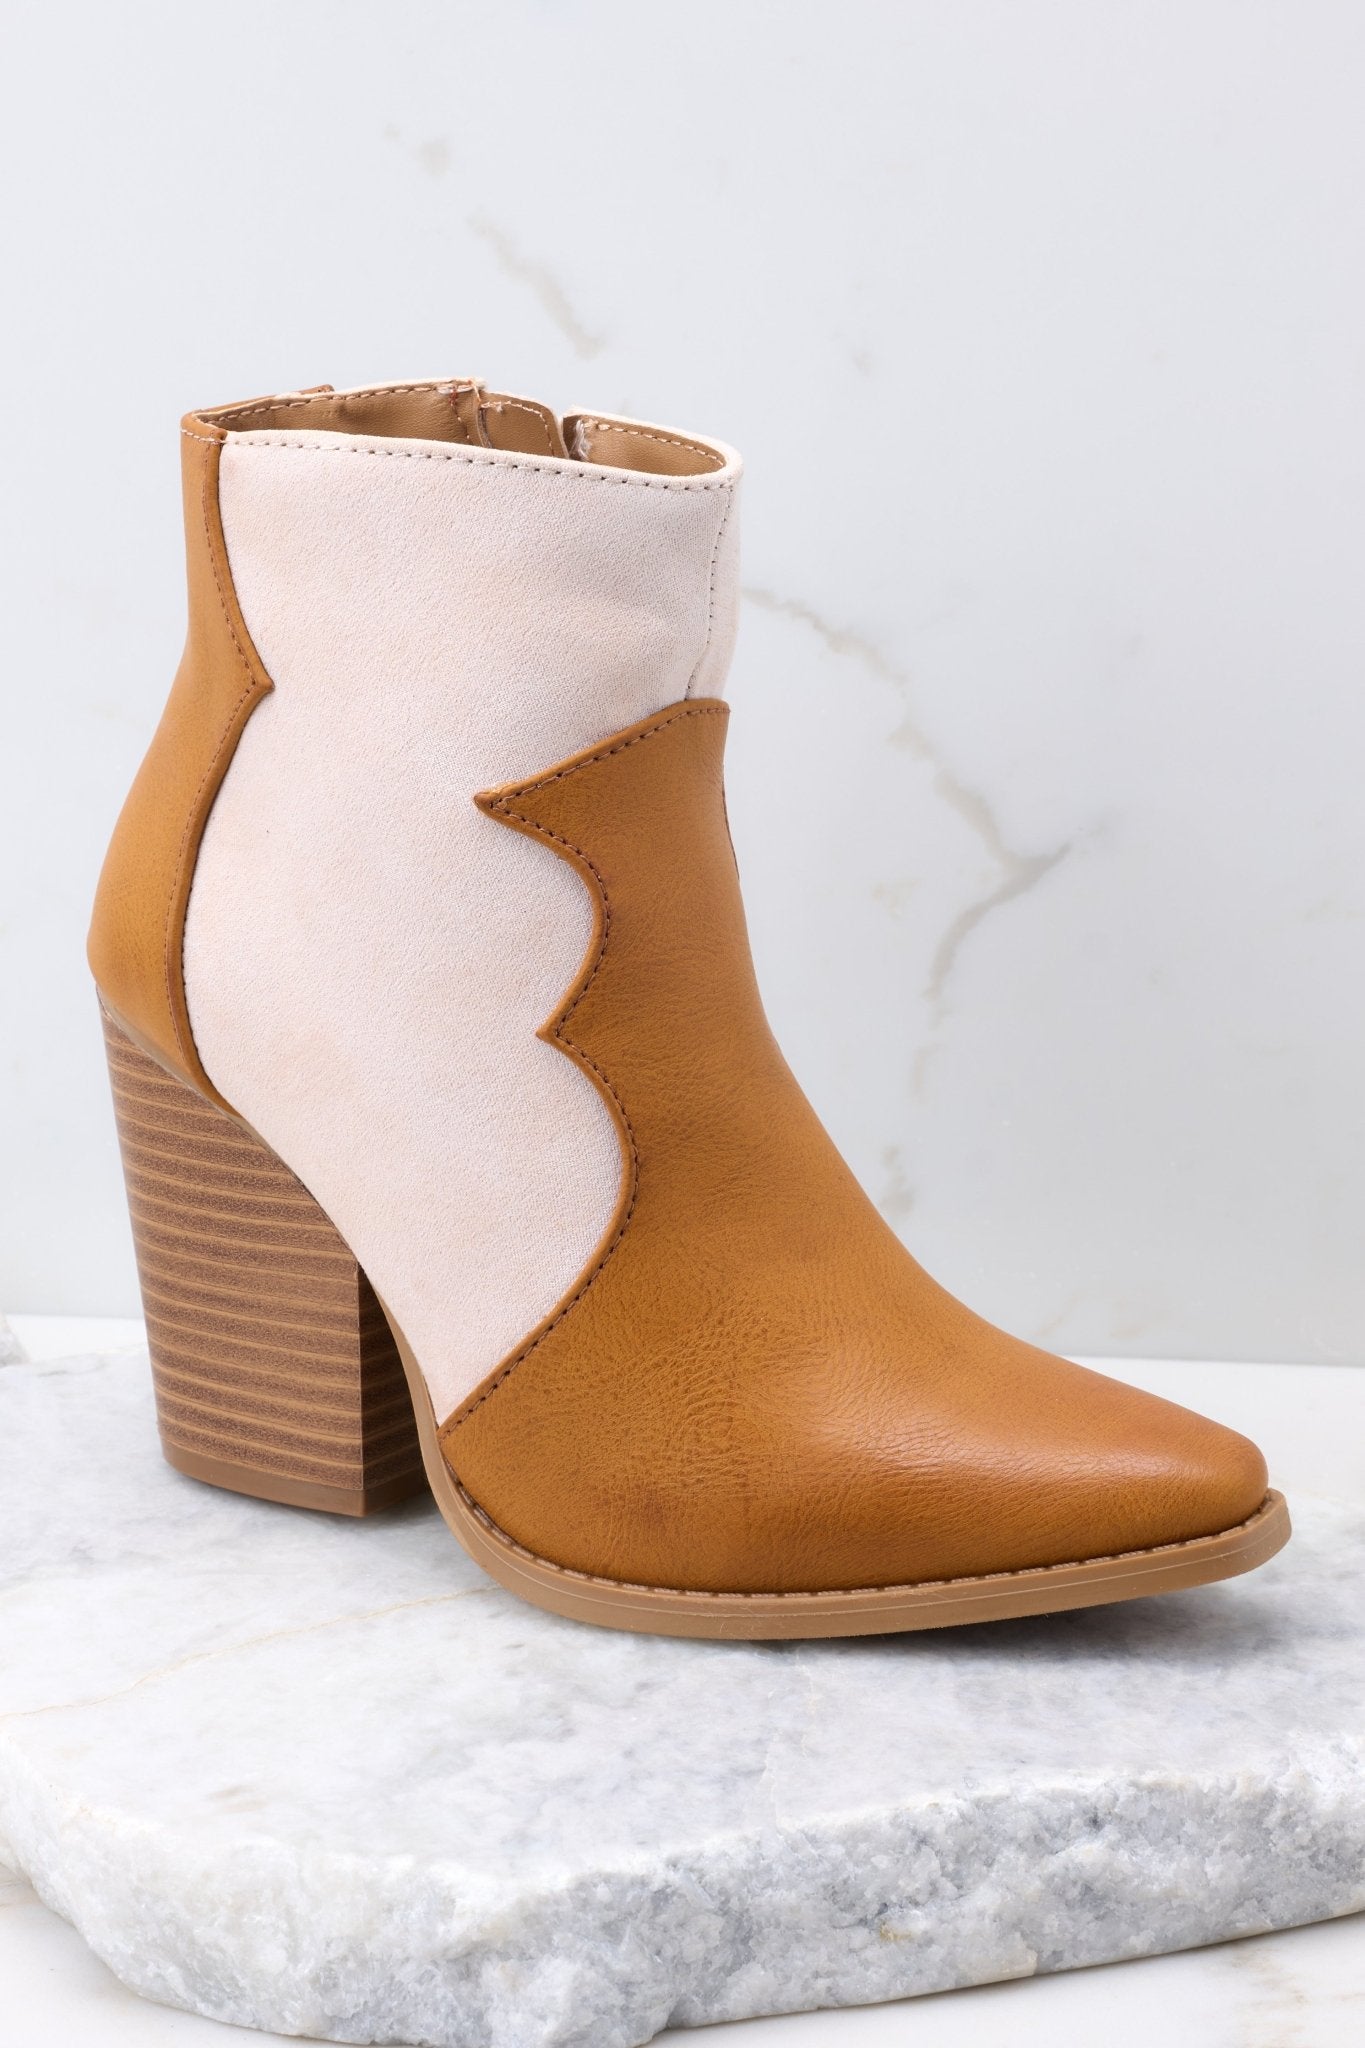 CHIKO Serenela Square Toe Block Heels Ankle Boots